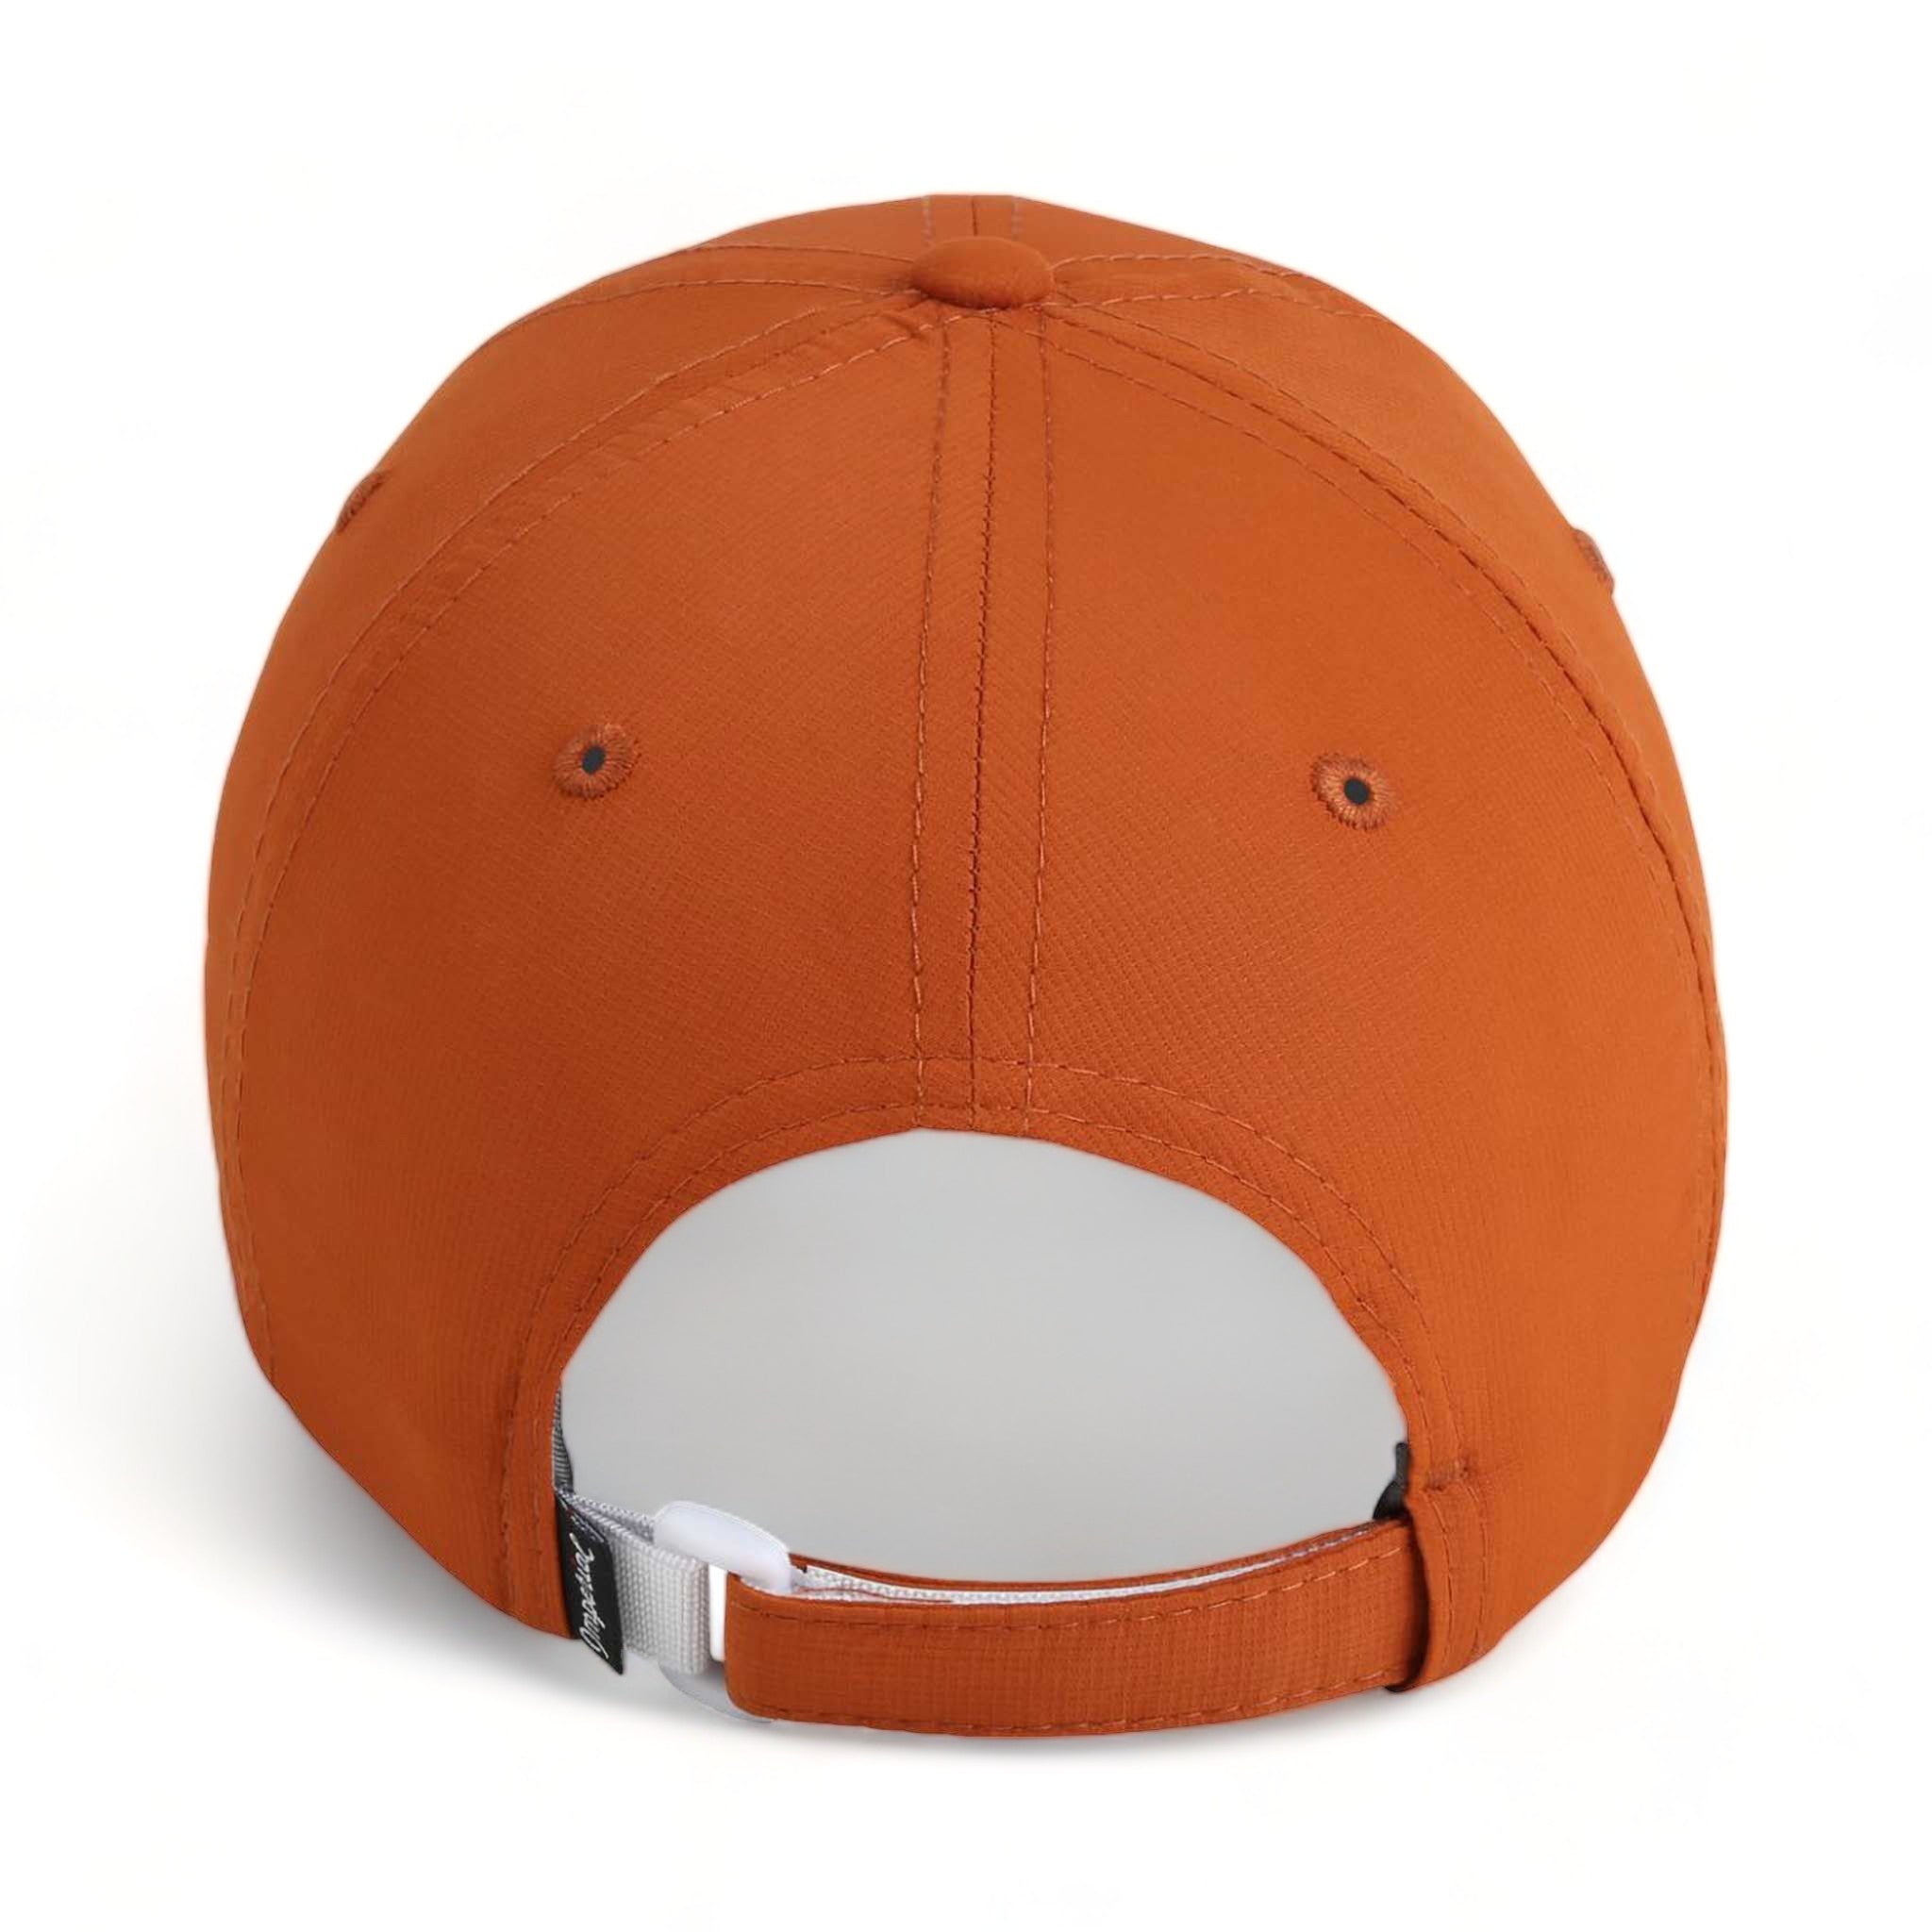 Back view of Imperial X210P custom hat in burnt orange